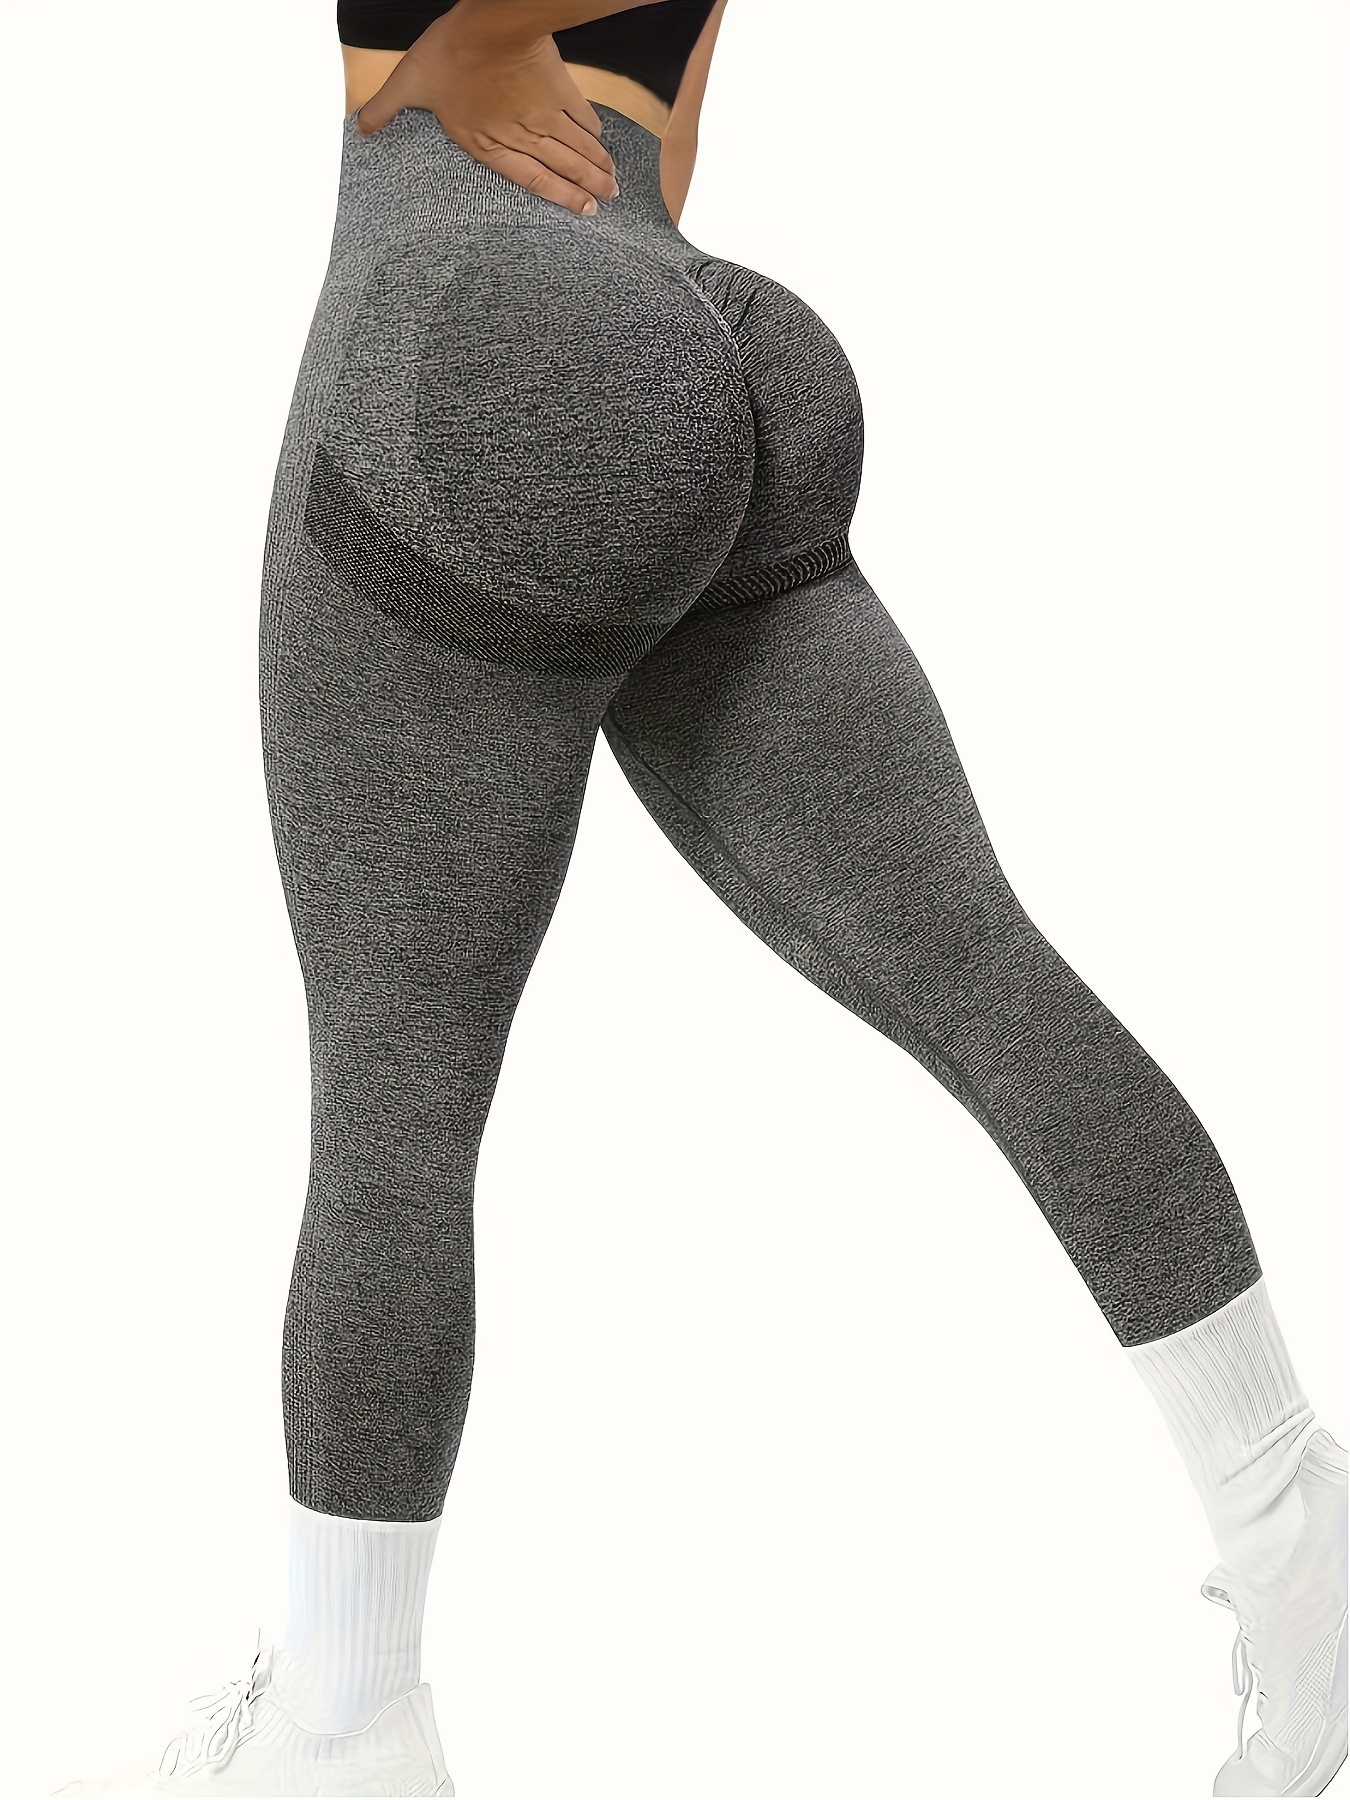 Seamless Yoga Pants Women Hip Lifting High Waist Sports Leggings